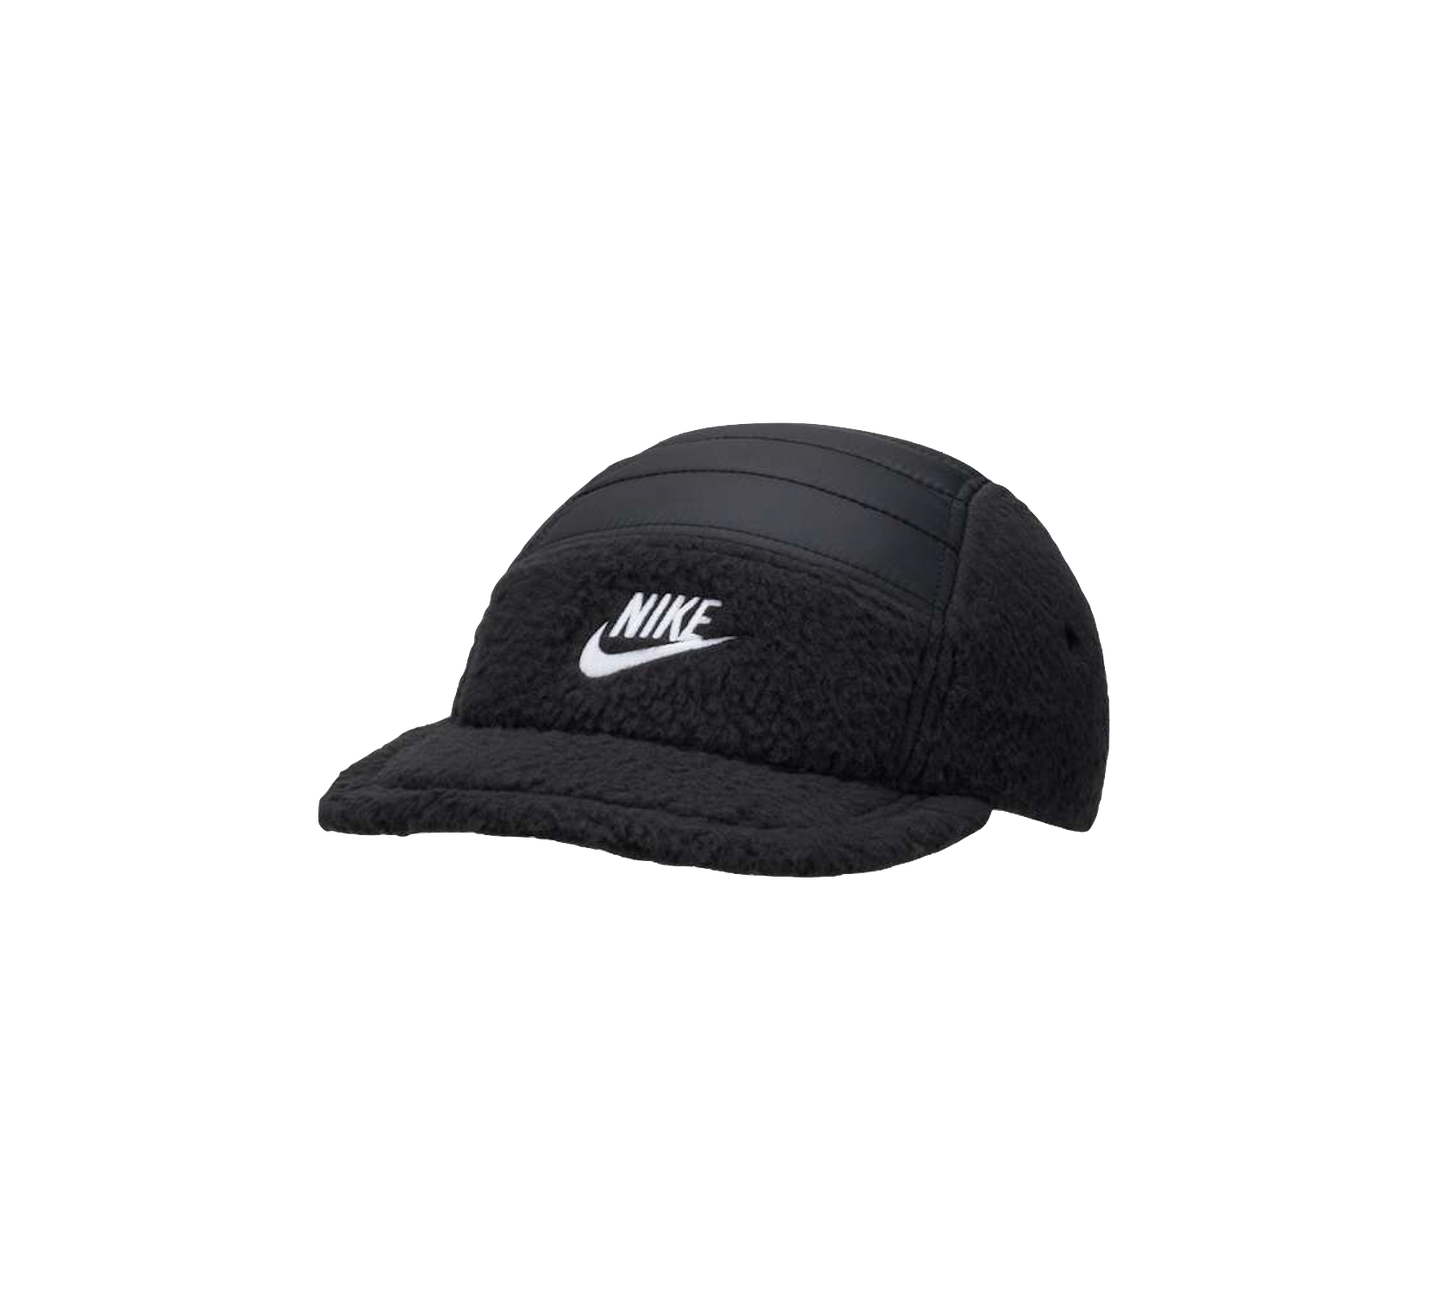 Nike SB Fly cap black